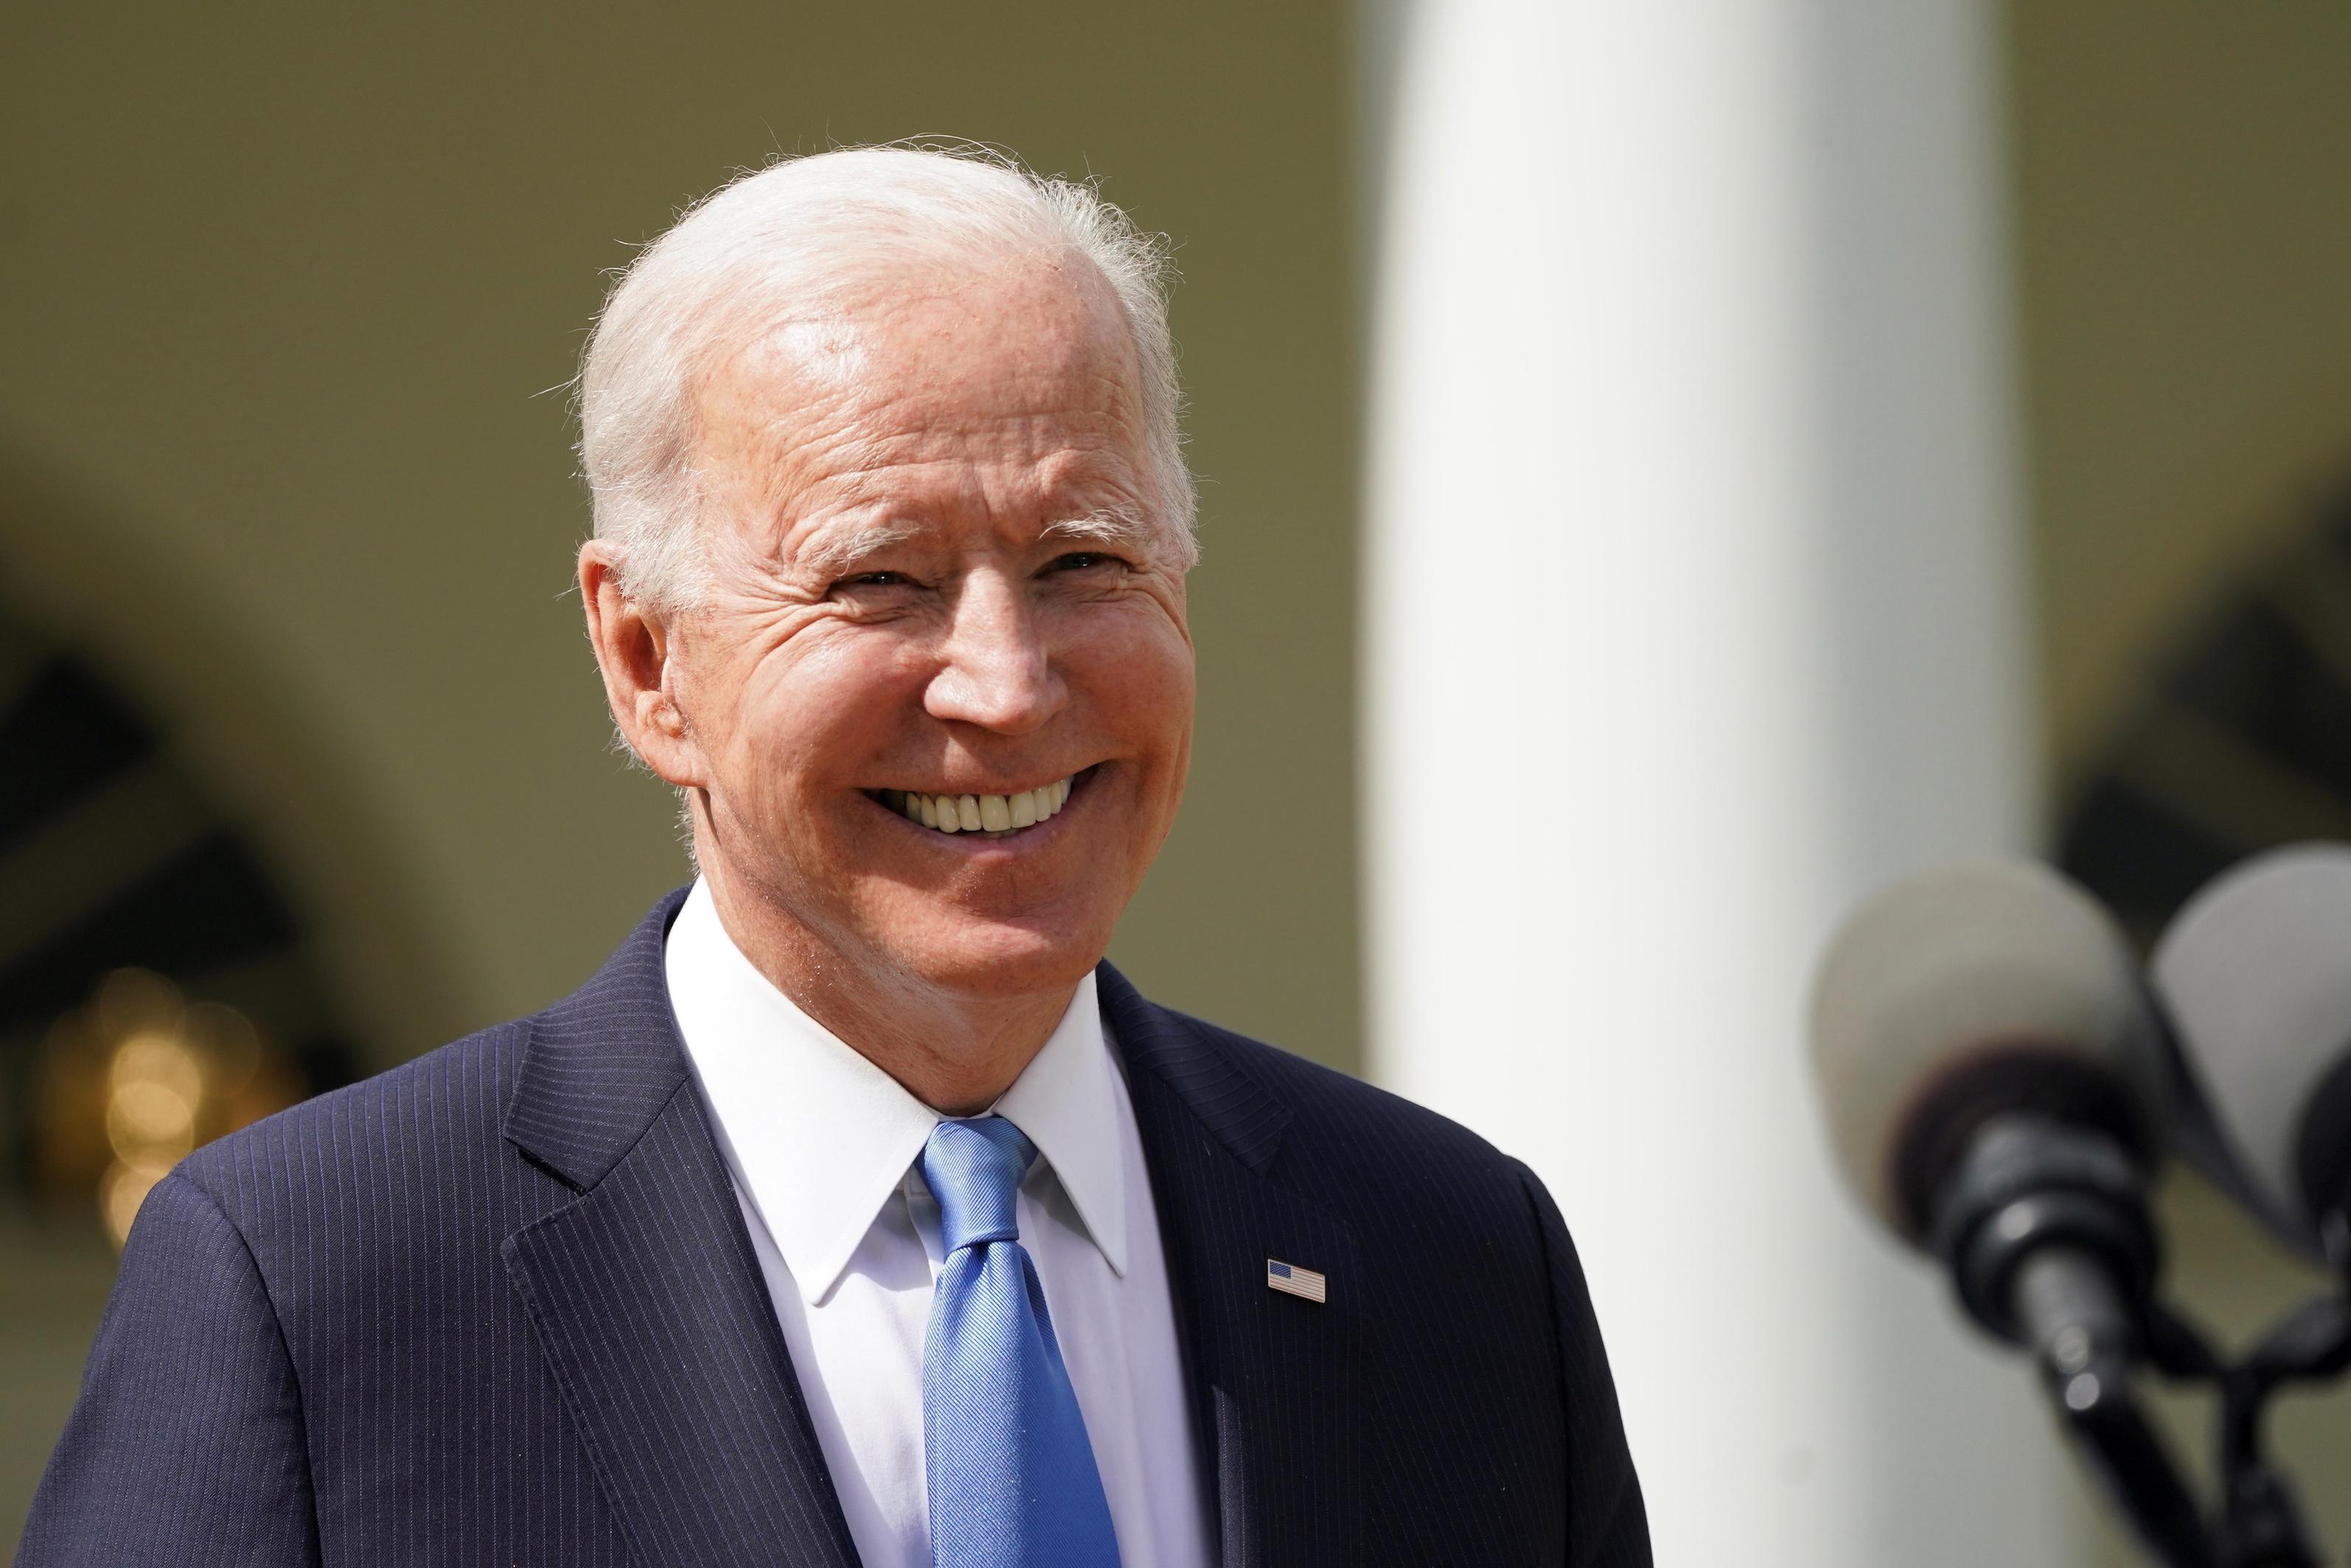 Biden celebrates new citizens as US launches naturalization effort